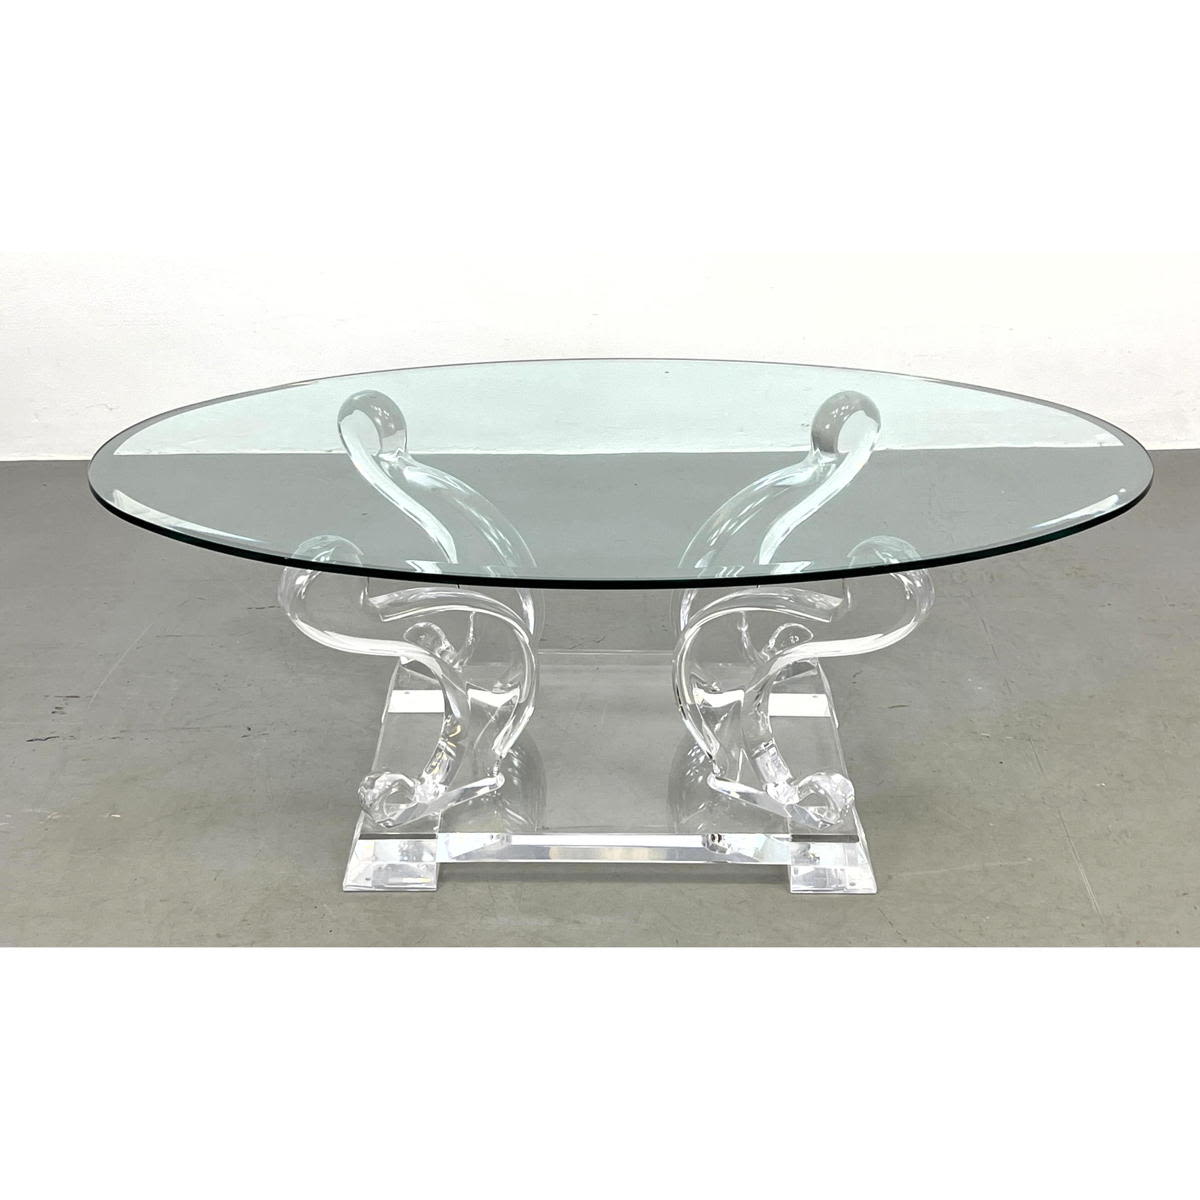 Modernist Glass Top Coffee Table 2b84fc